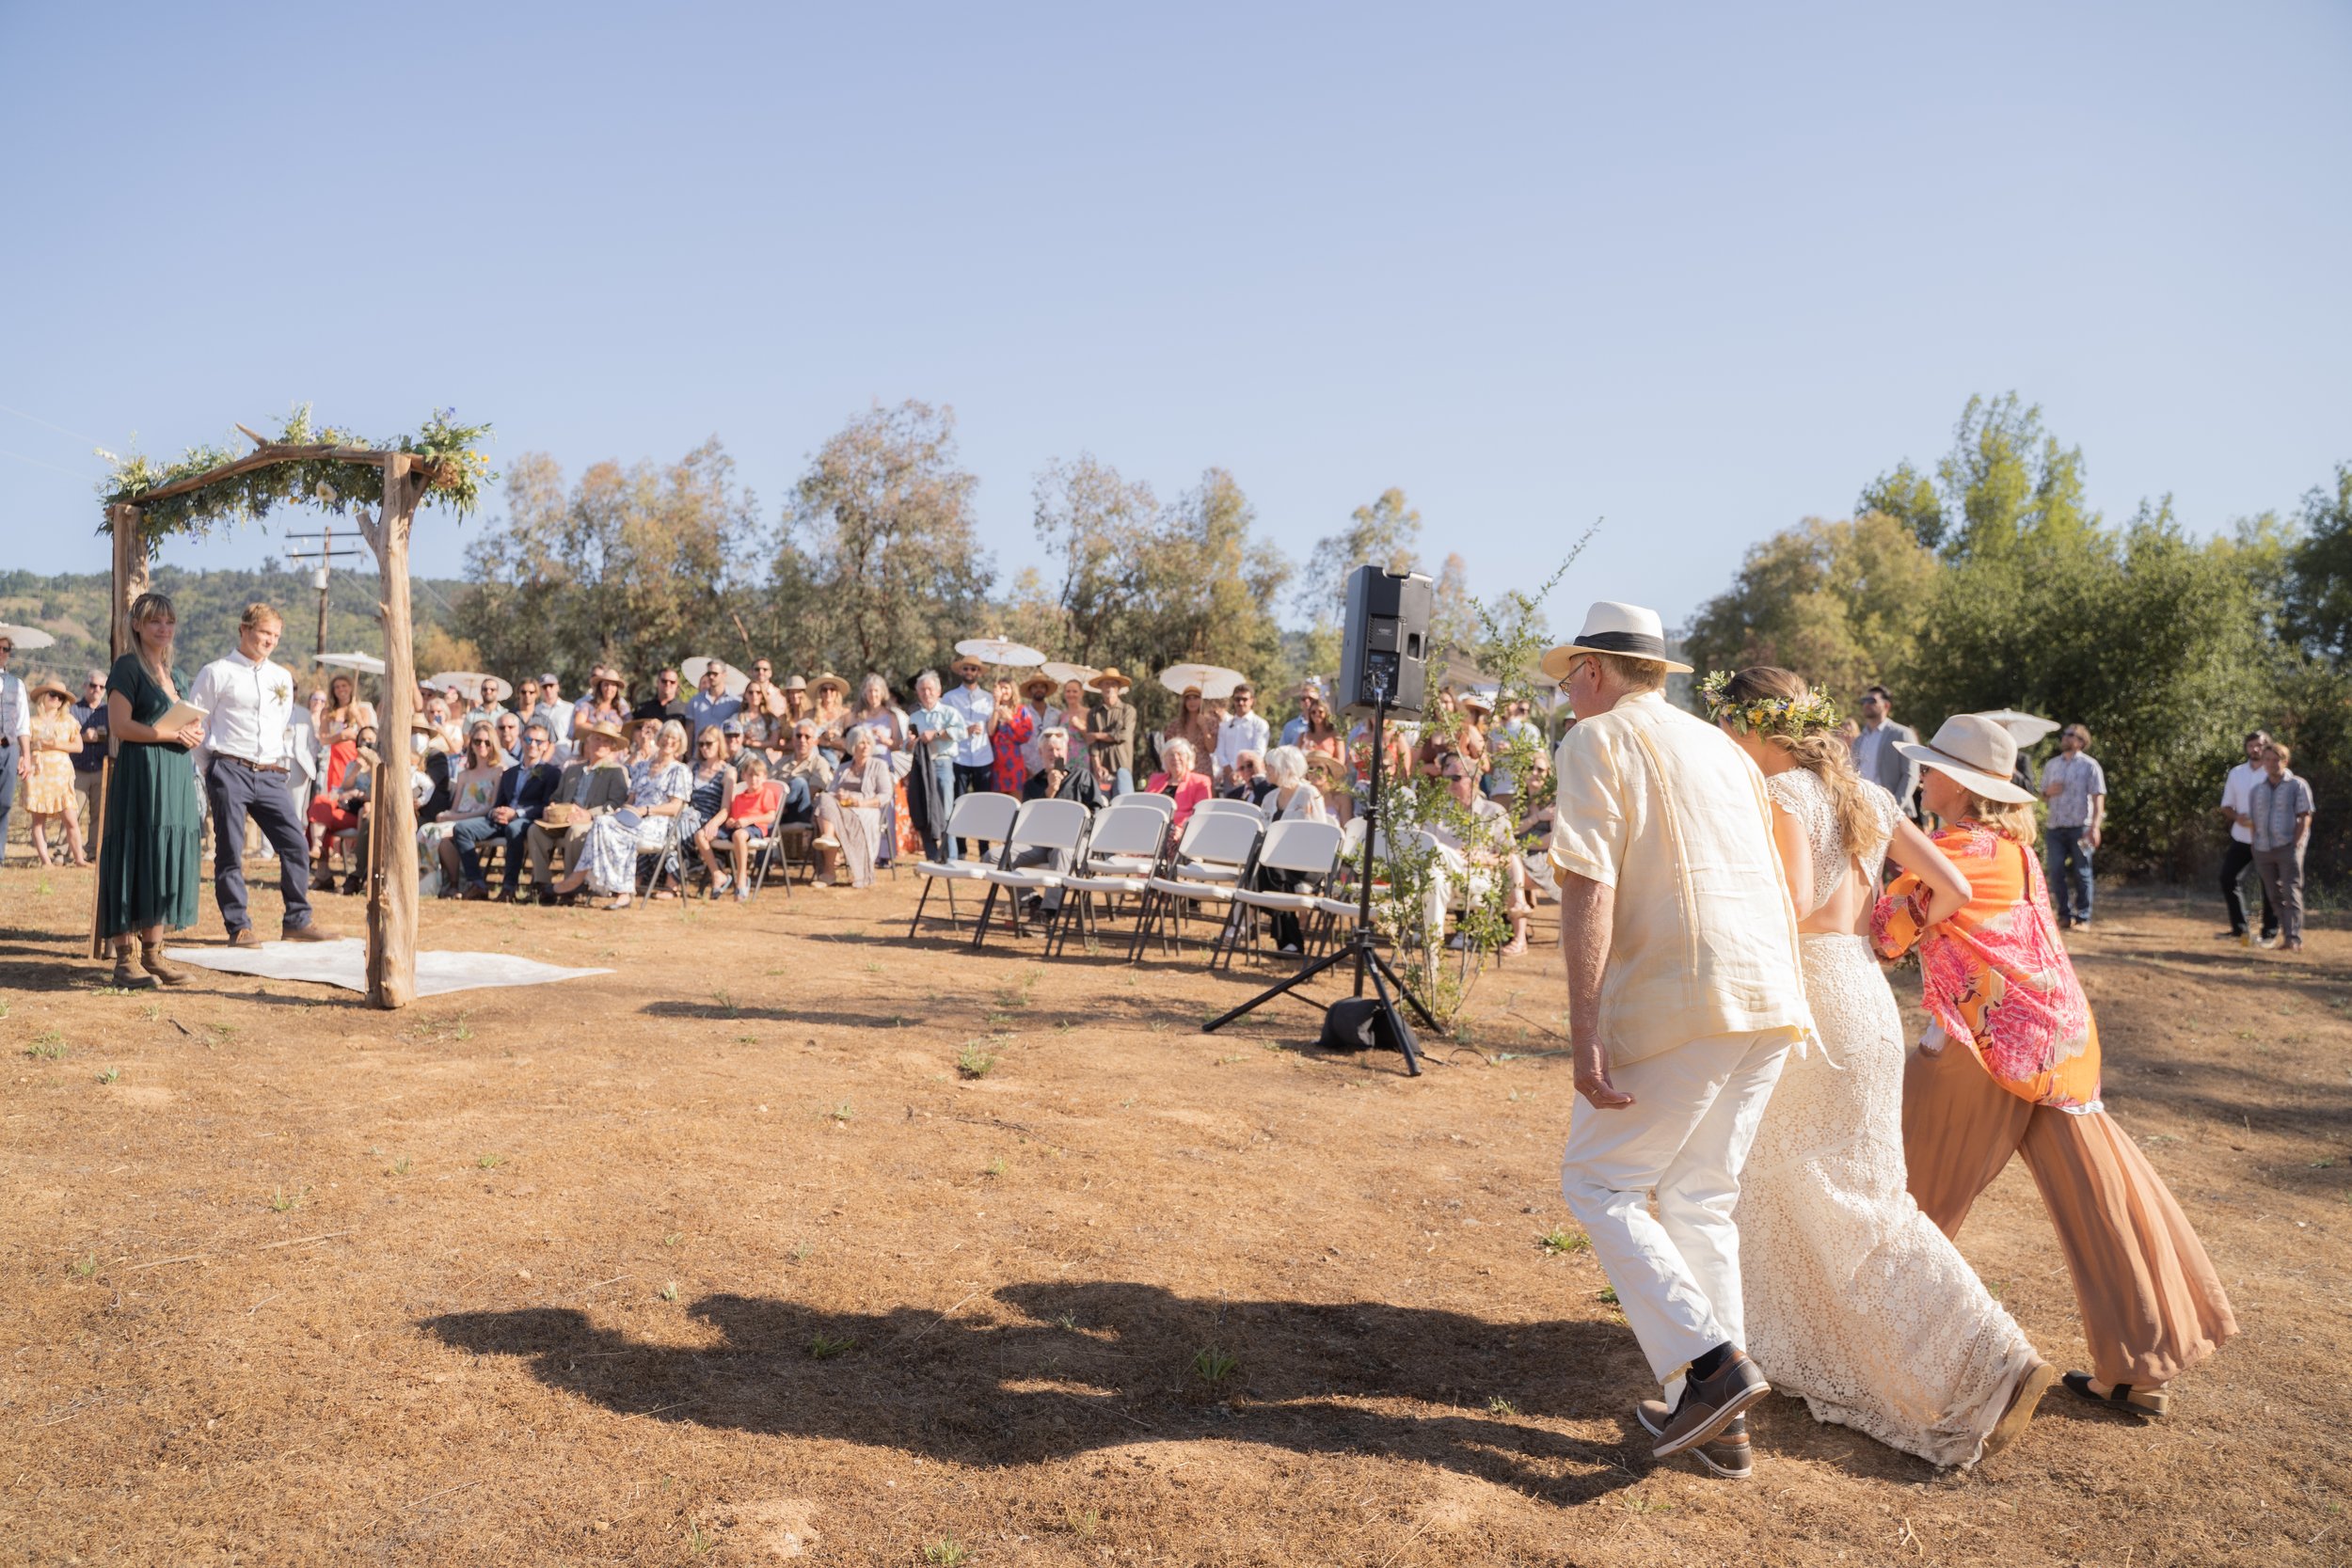 www.santabarbarawedding.com | Events by Fran | Jacob Grant Photography | Shiela Morales | Amigo Party Rentals | Daron Hope | Bride Walking Into Ceremony with Parents